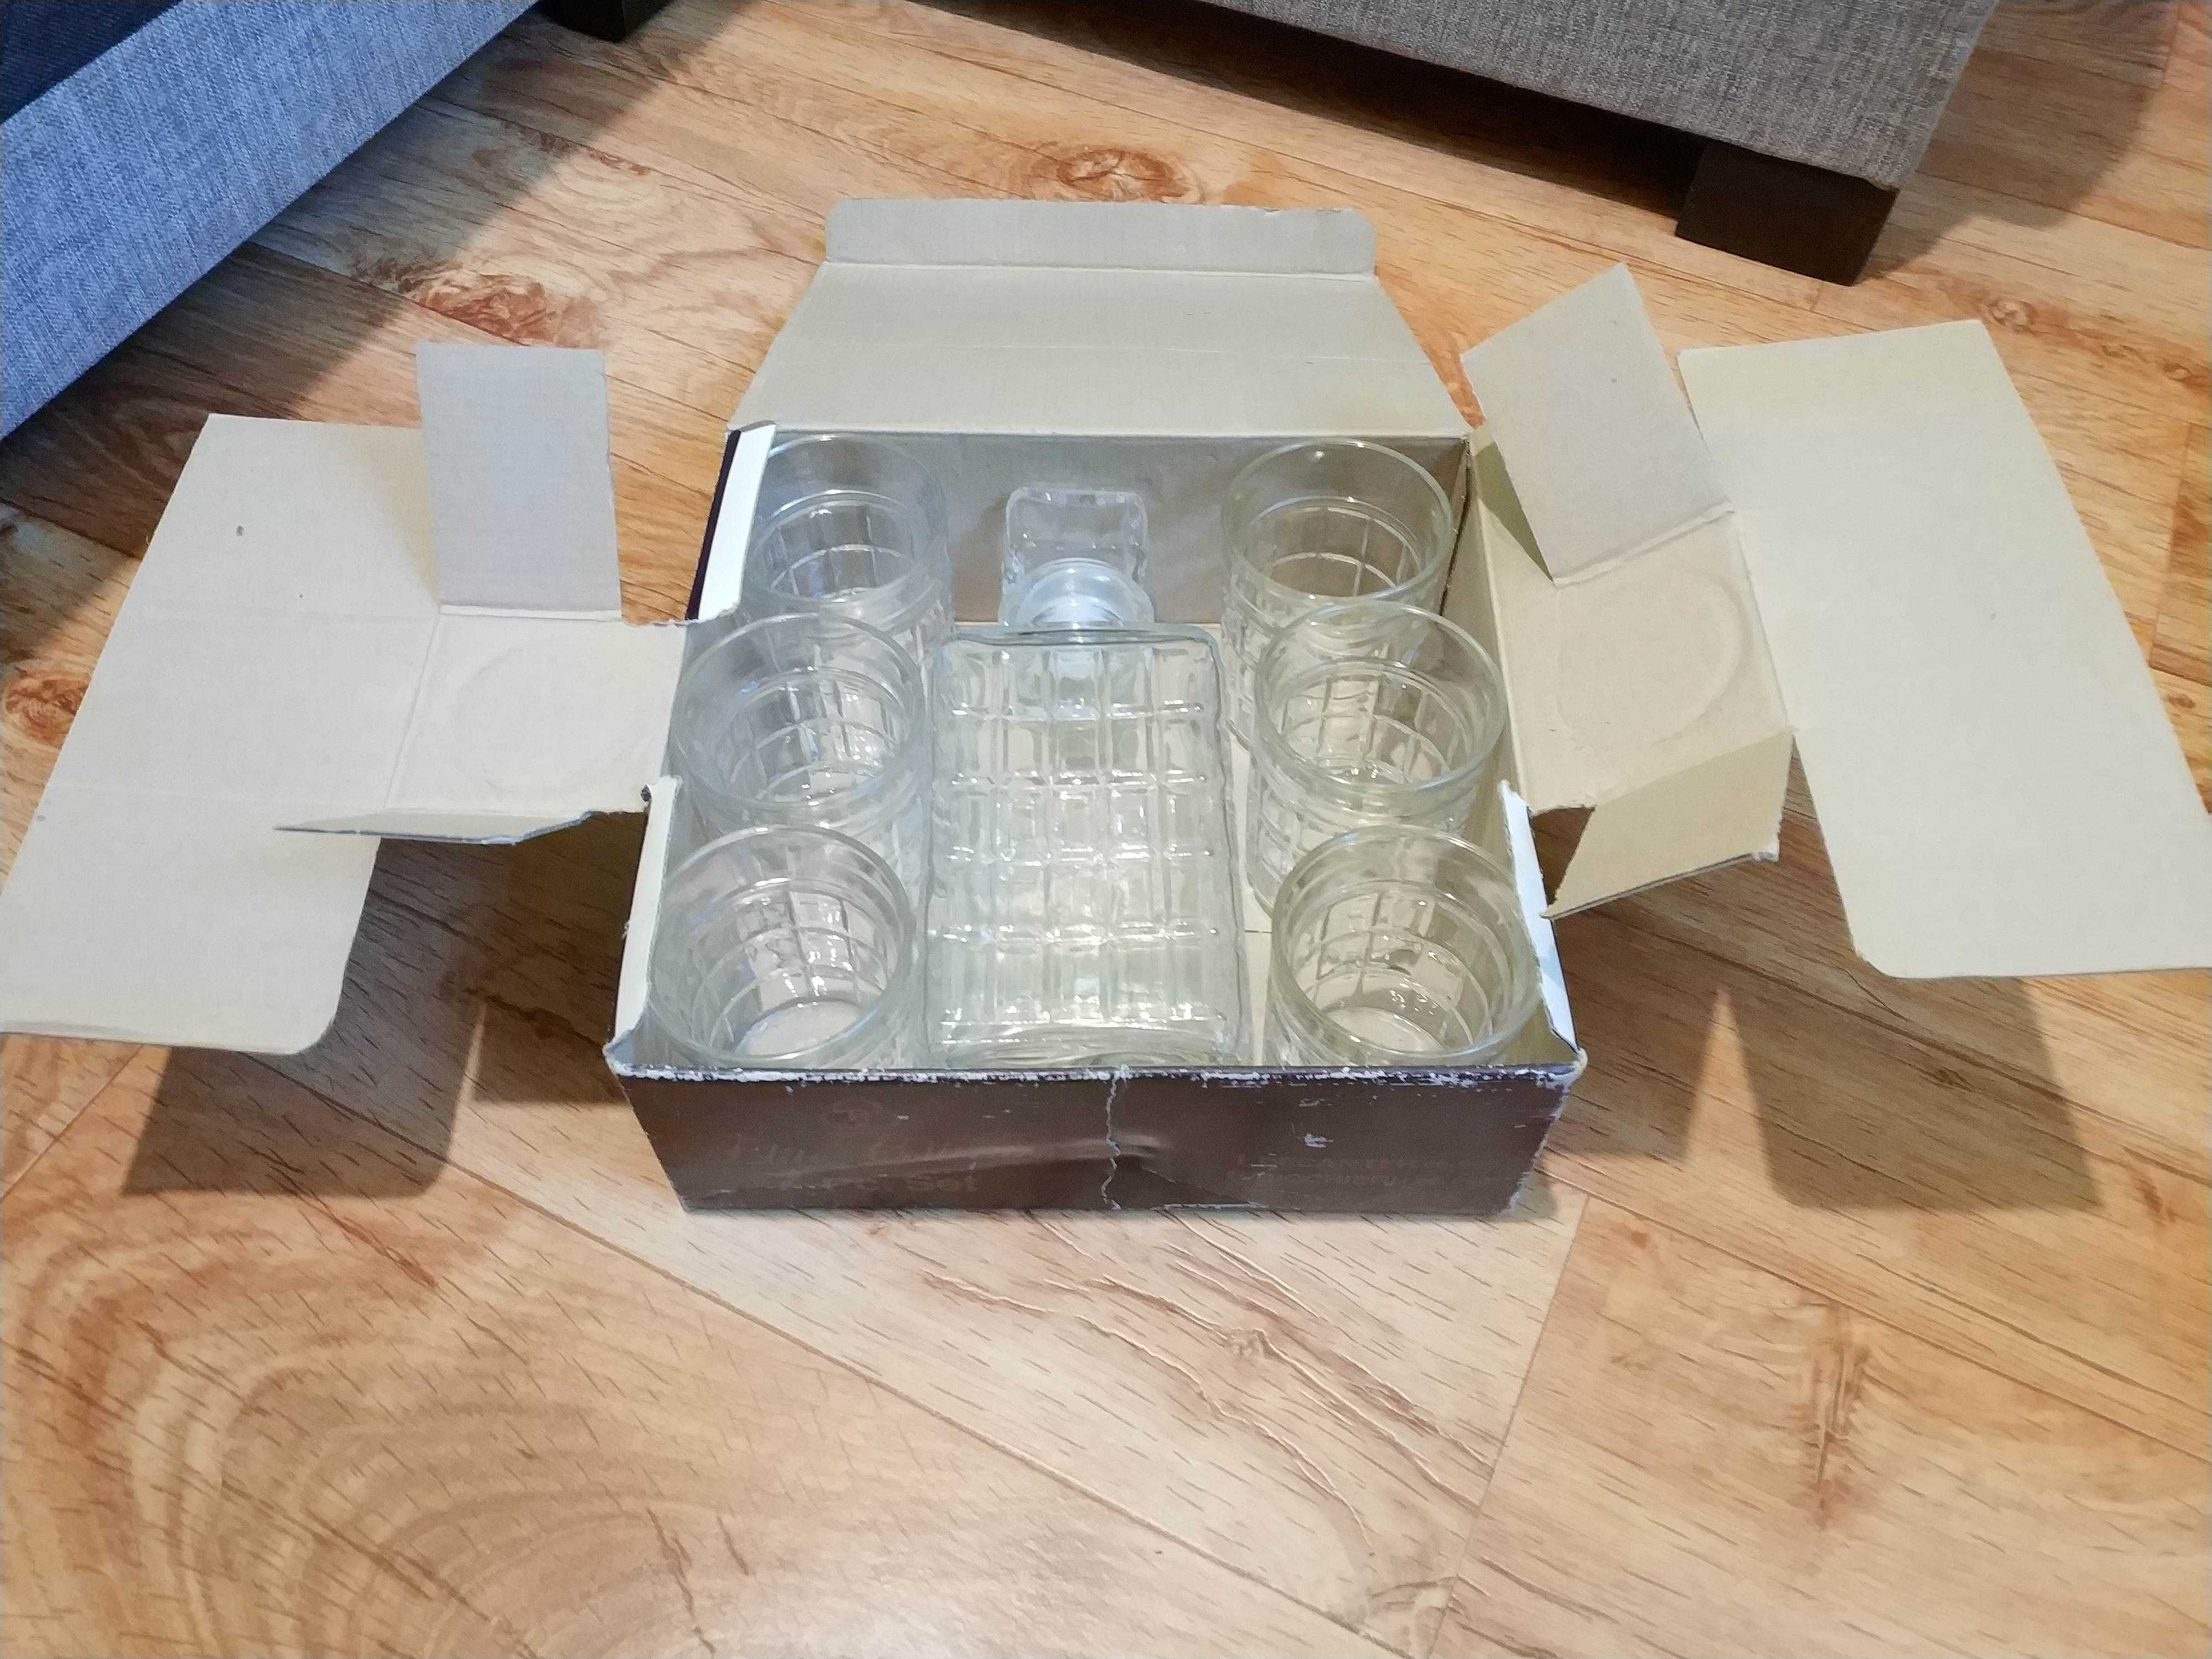 Karafka zestaw szklanki 6szt elite collection made in italy pudełko